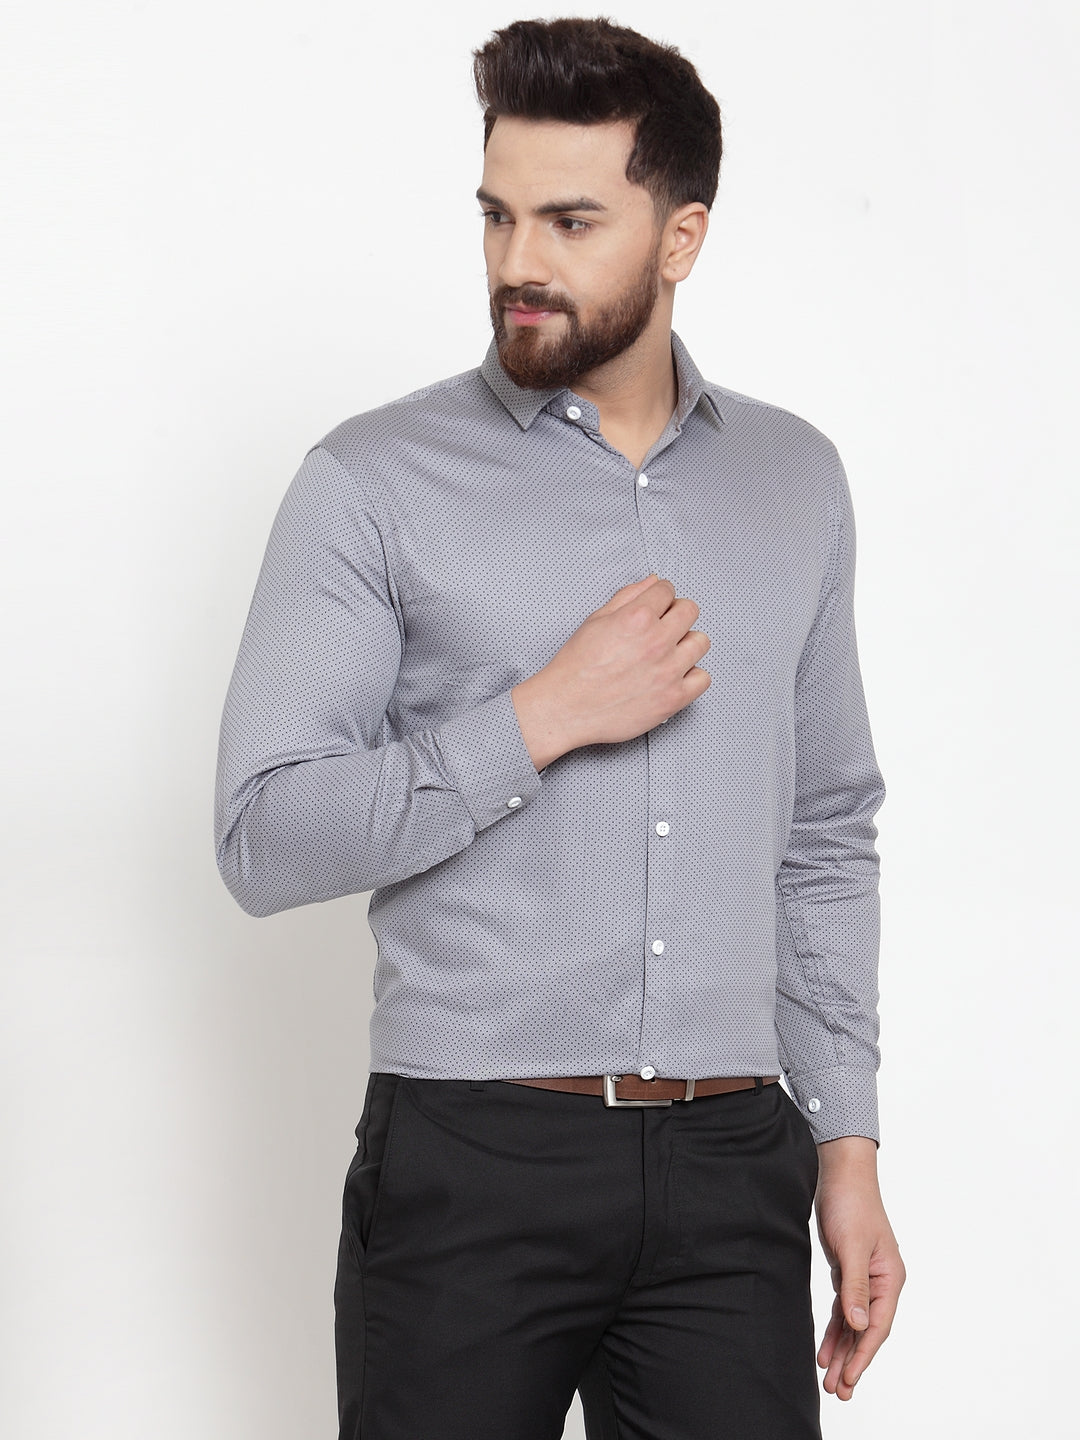 Men's Grey Cotton Polka Dots Formal Shirts ( SF 736Grey ) - Jainish